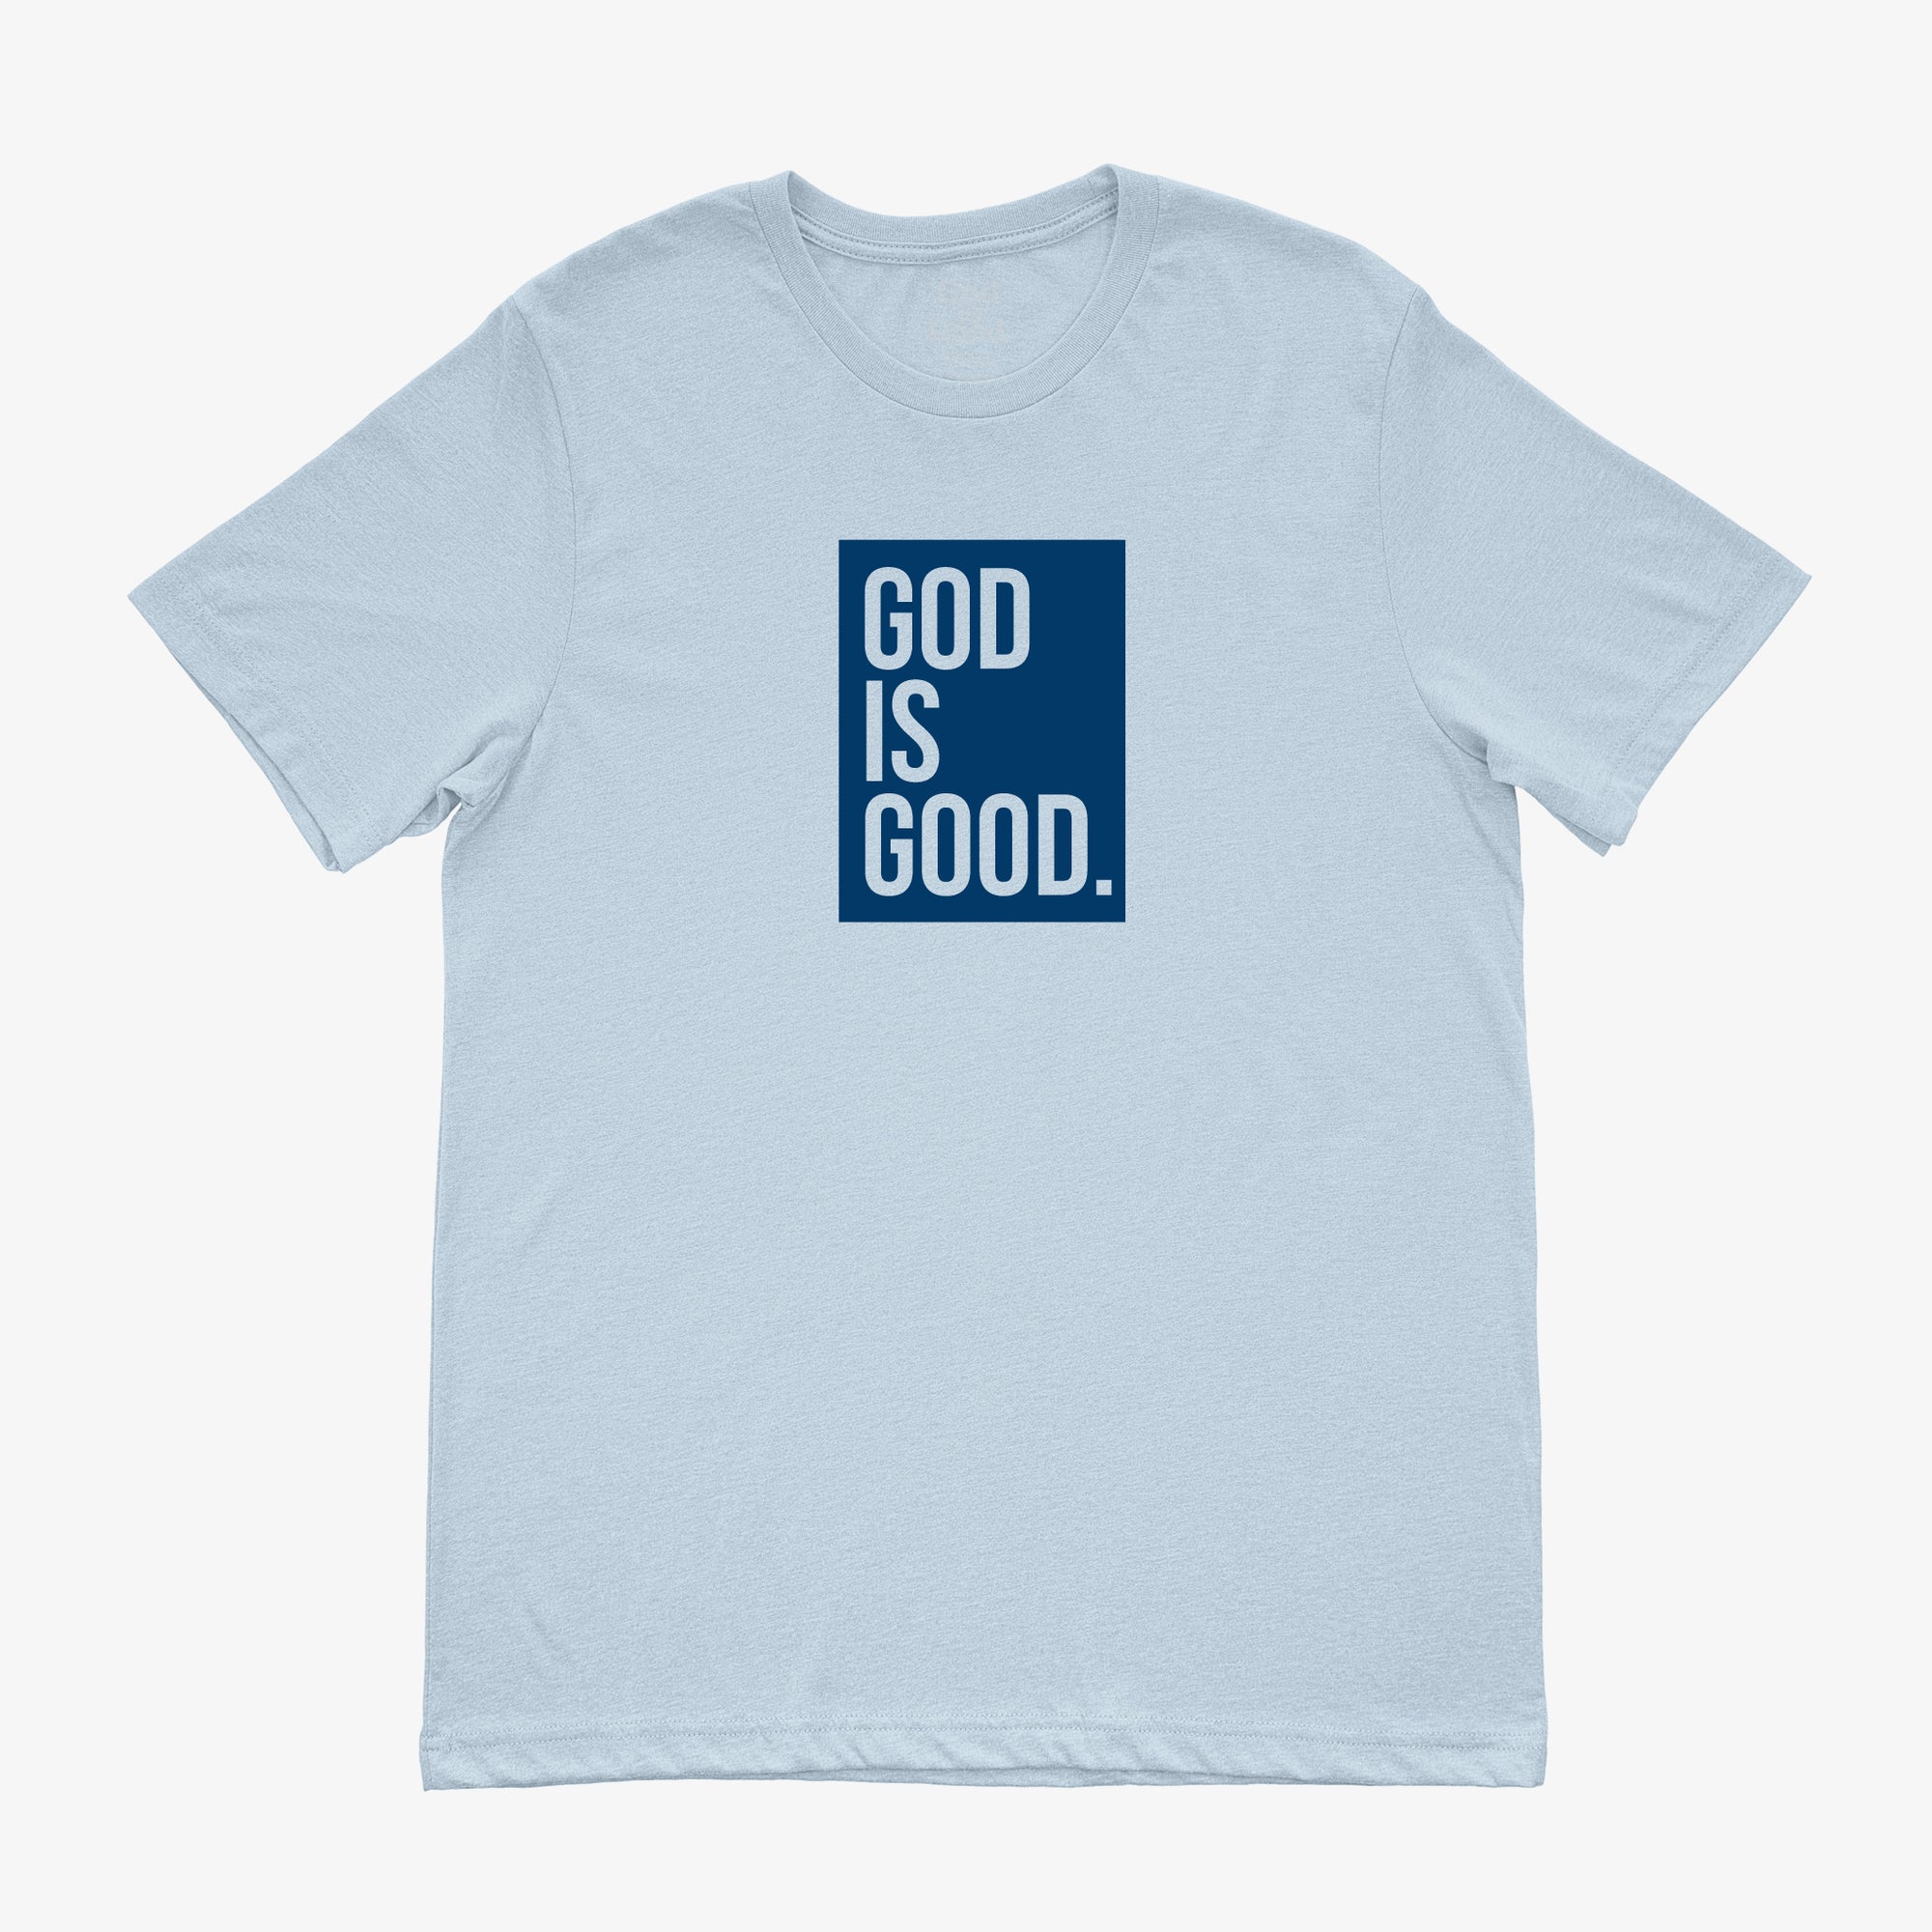 "GOD IS GOOD" TEE (POWDER BLUE/BLUE)